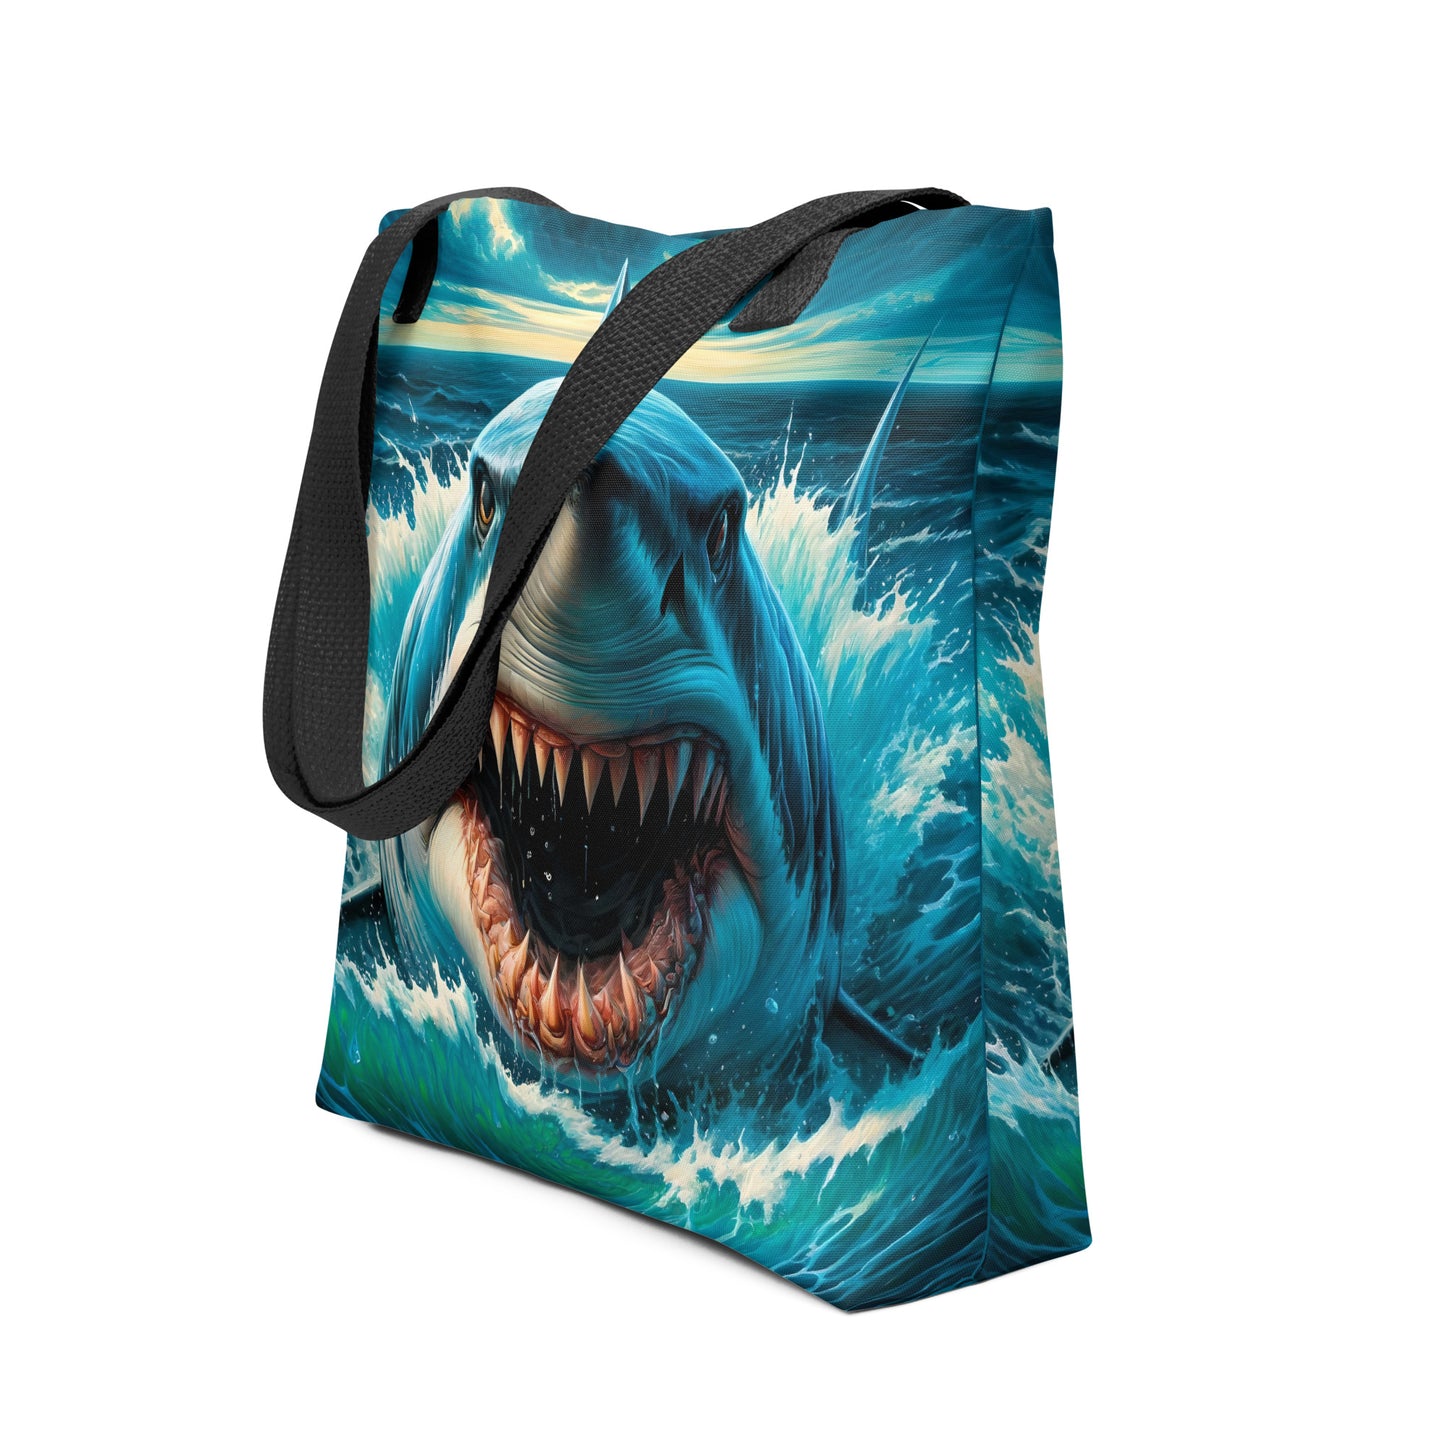 Shark Attack Tote Bag